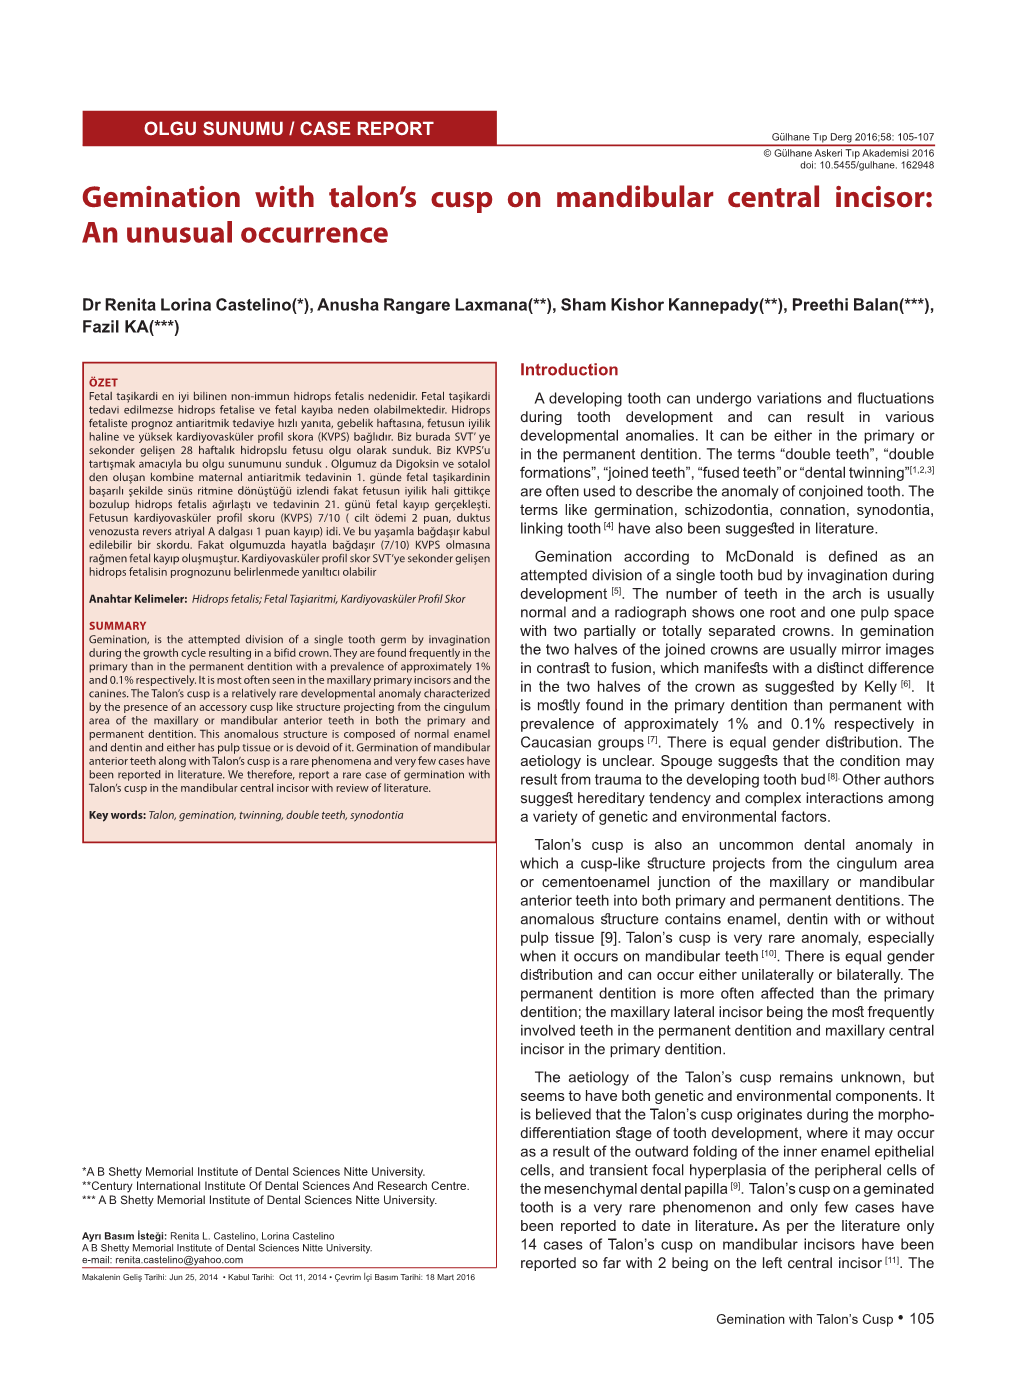 Gemination with Talon's Cusp on Mandibular Central Incisor